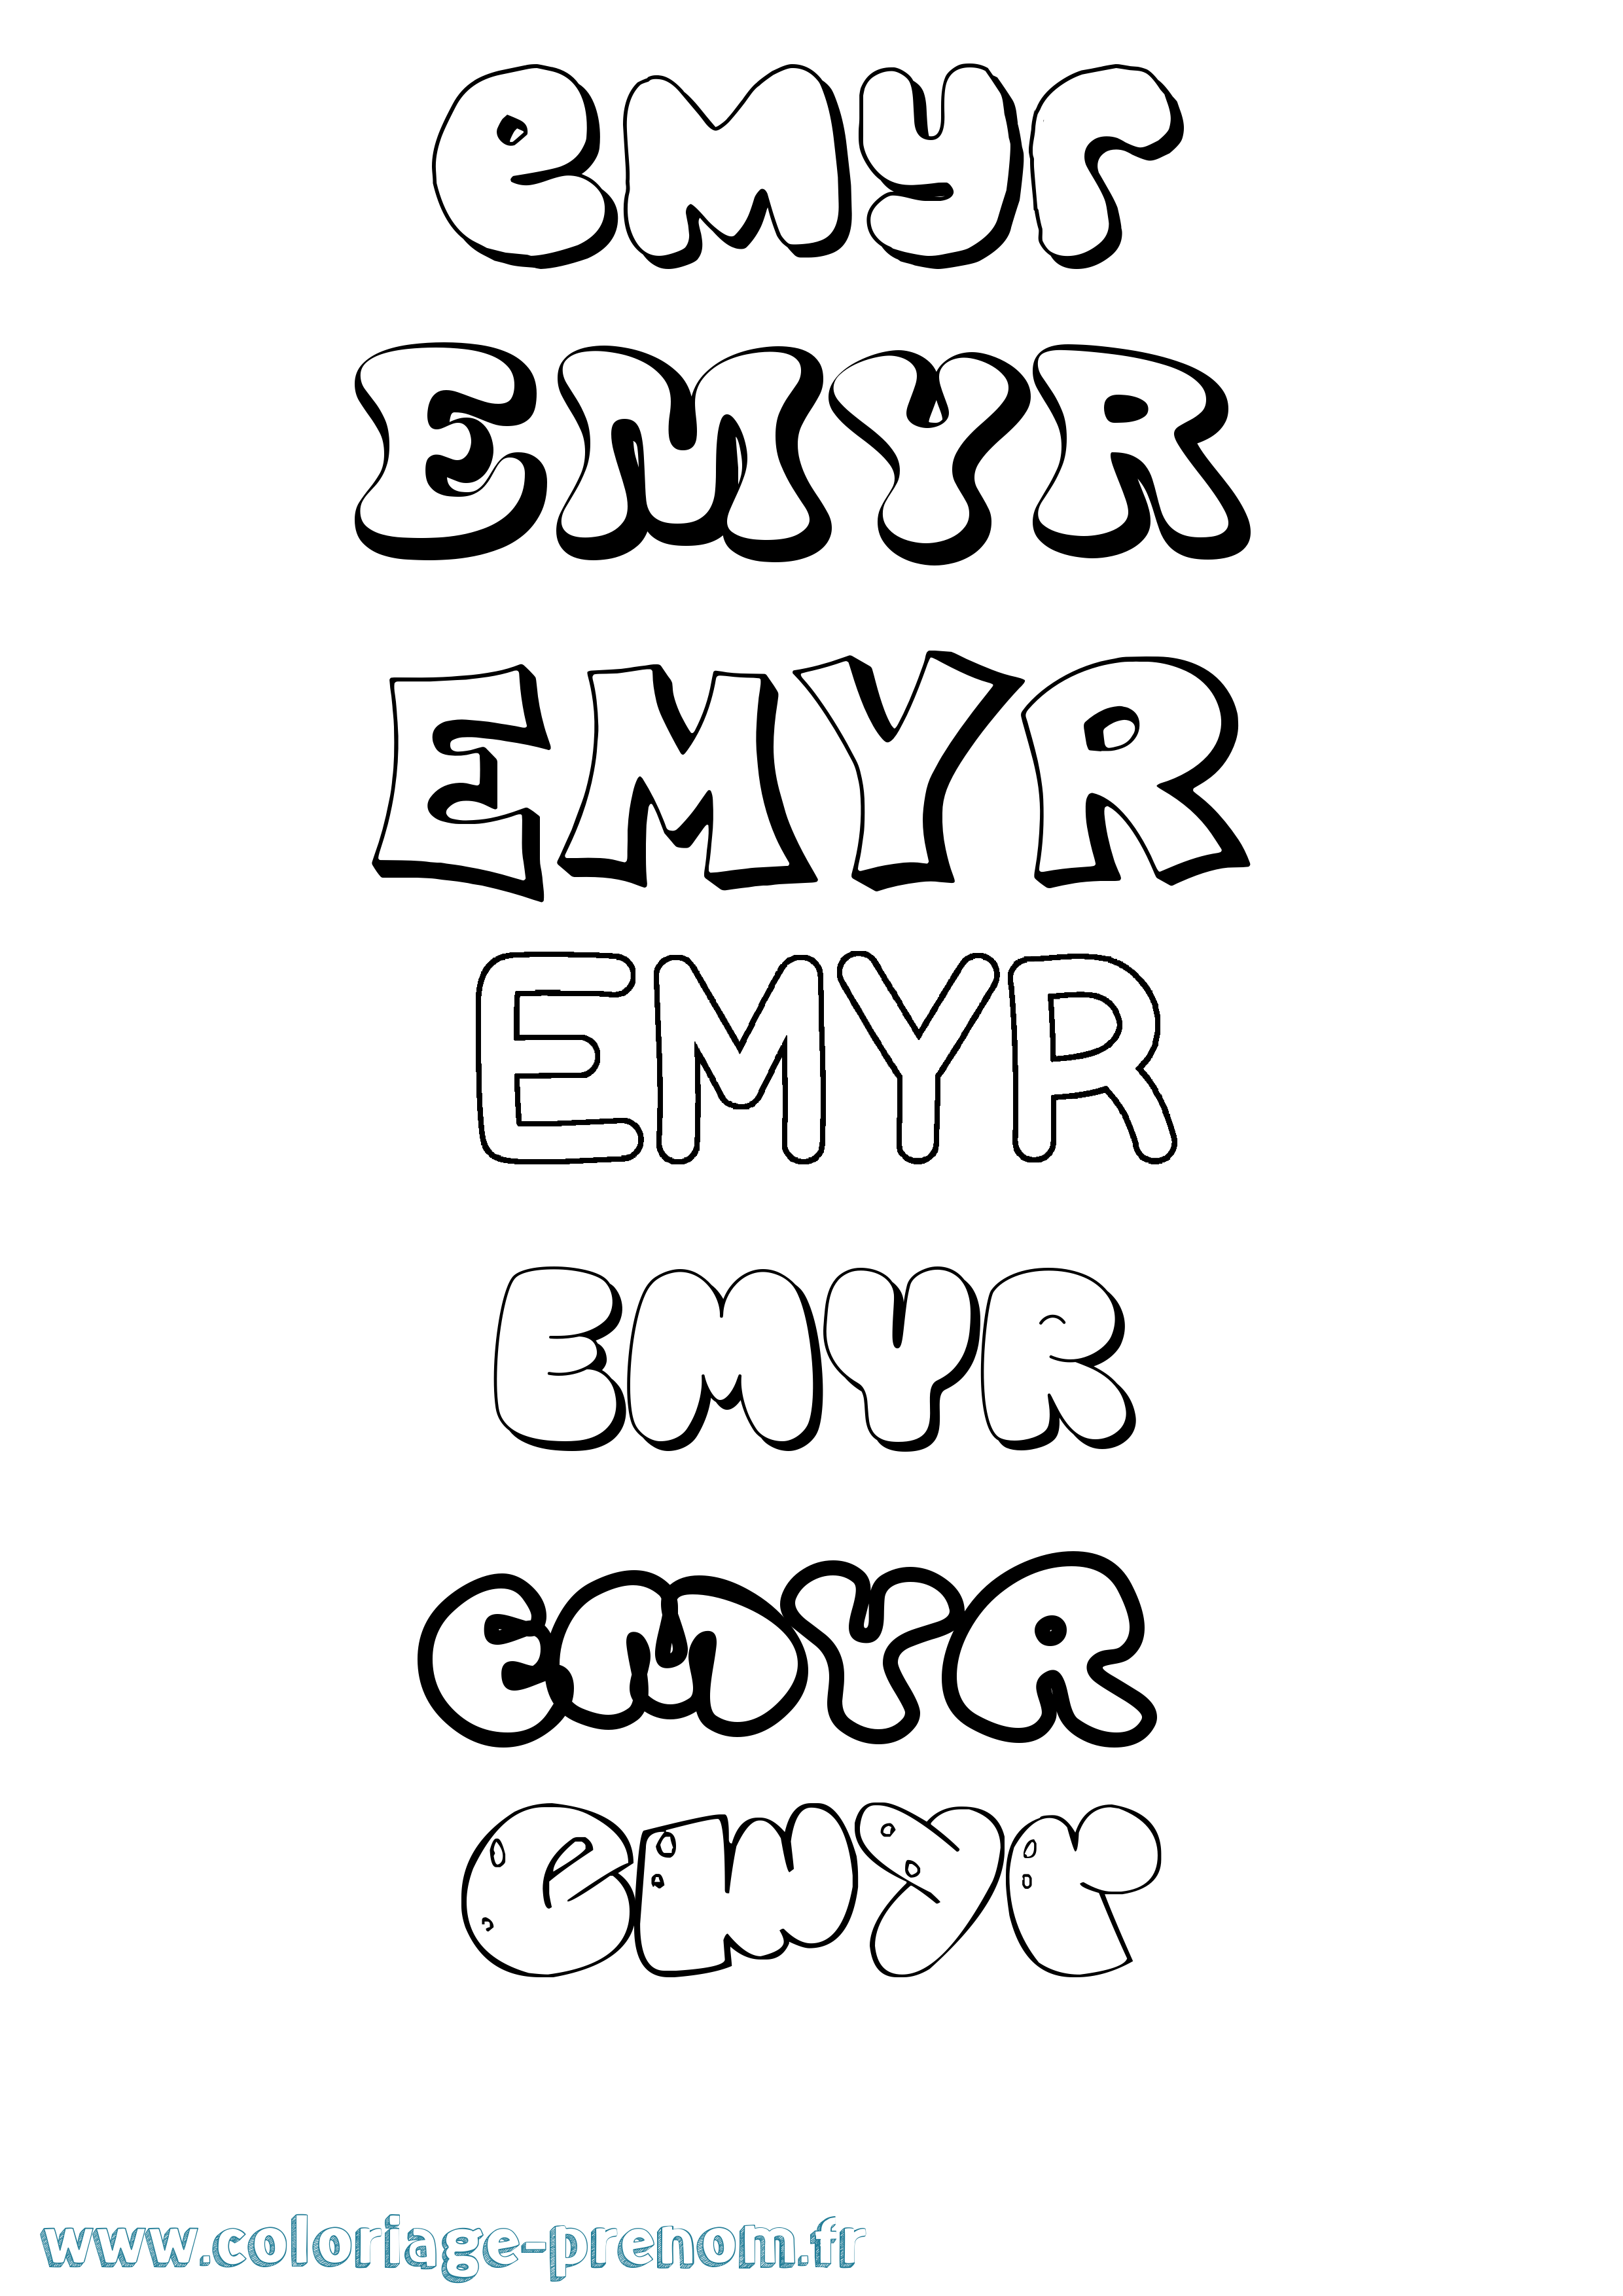 Coloriage prénom Emyr Bubble